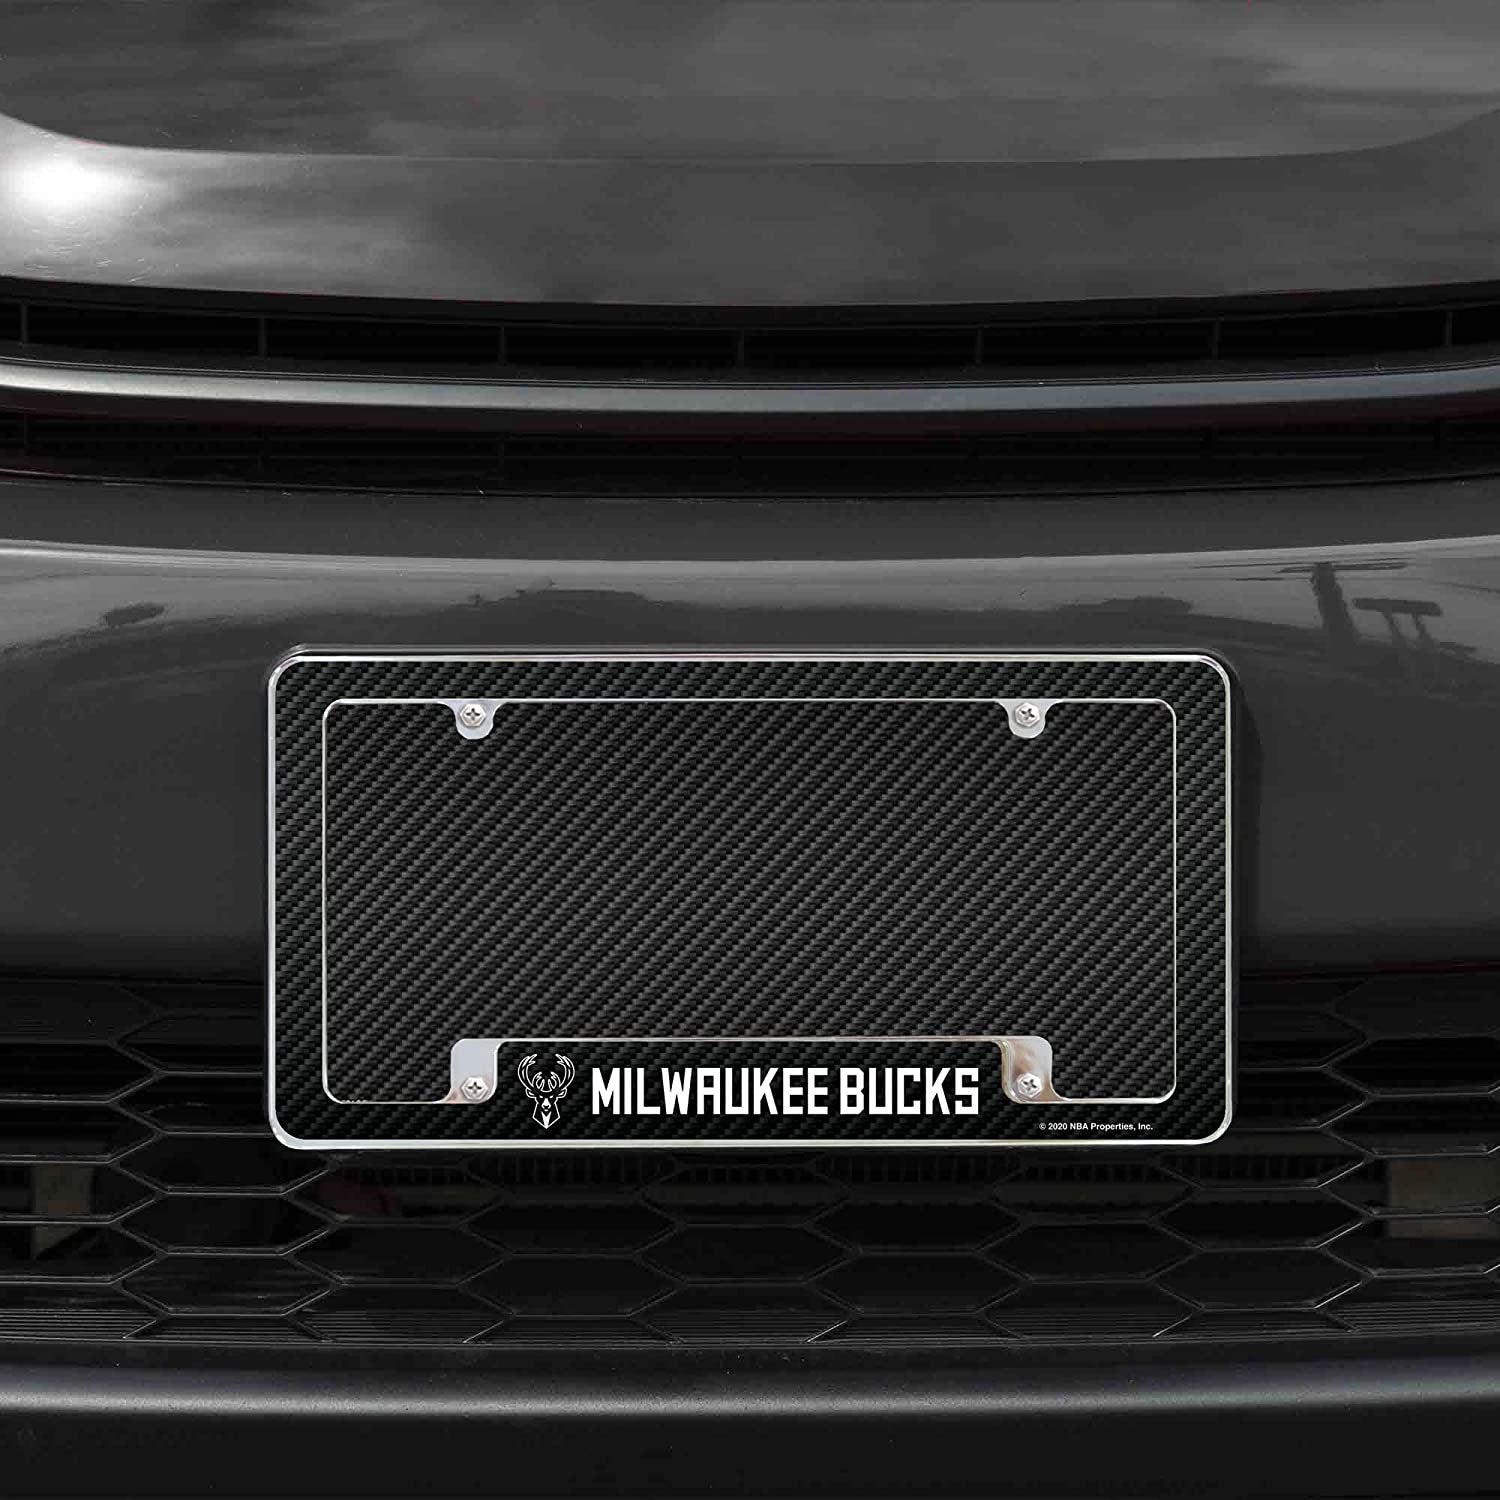 Milwaukee Bucks Metal License Plate Frame Chrome Tag Cover Carbon Fiber Design 6x12 Inch